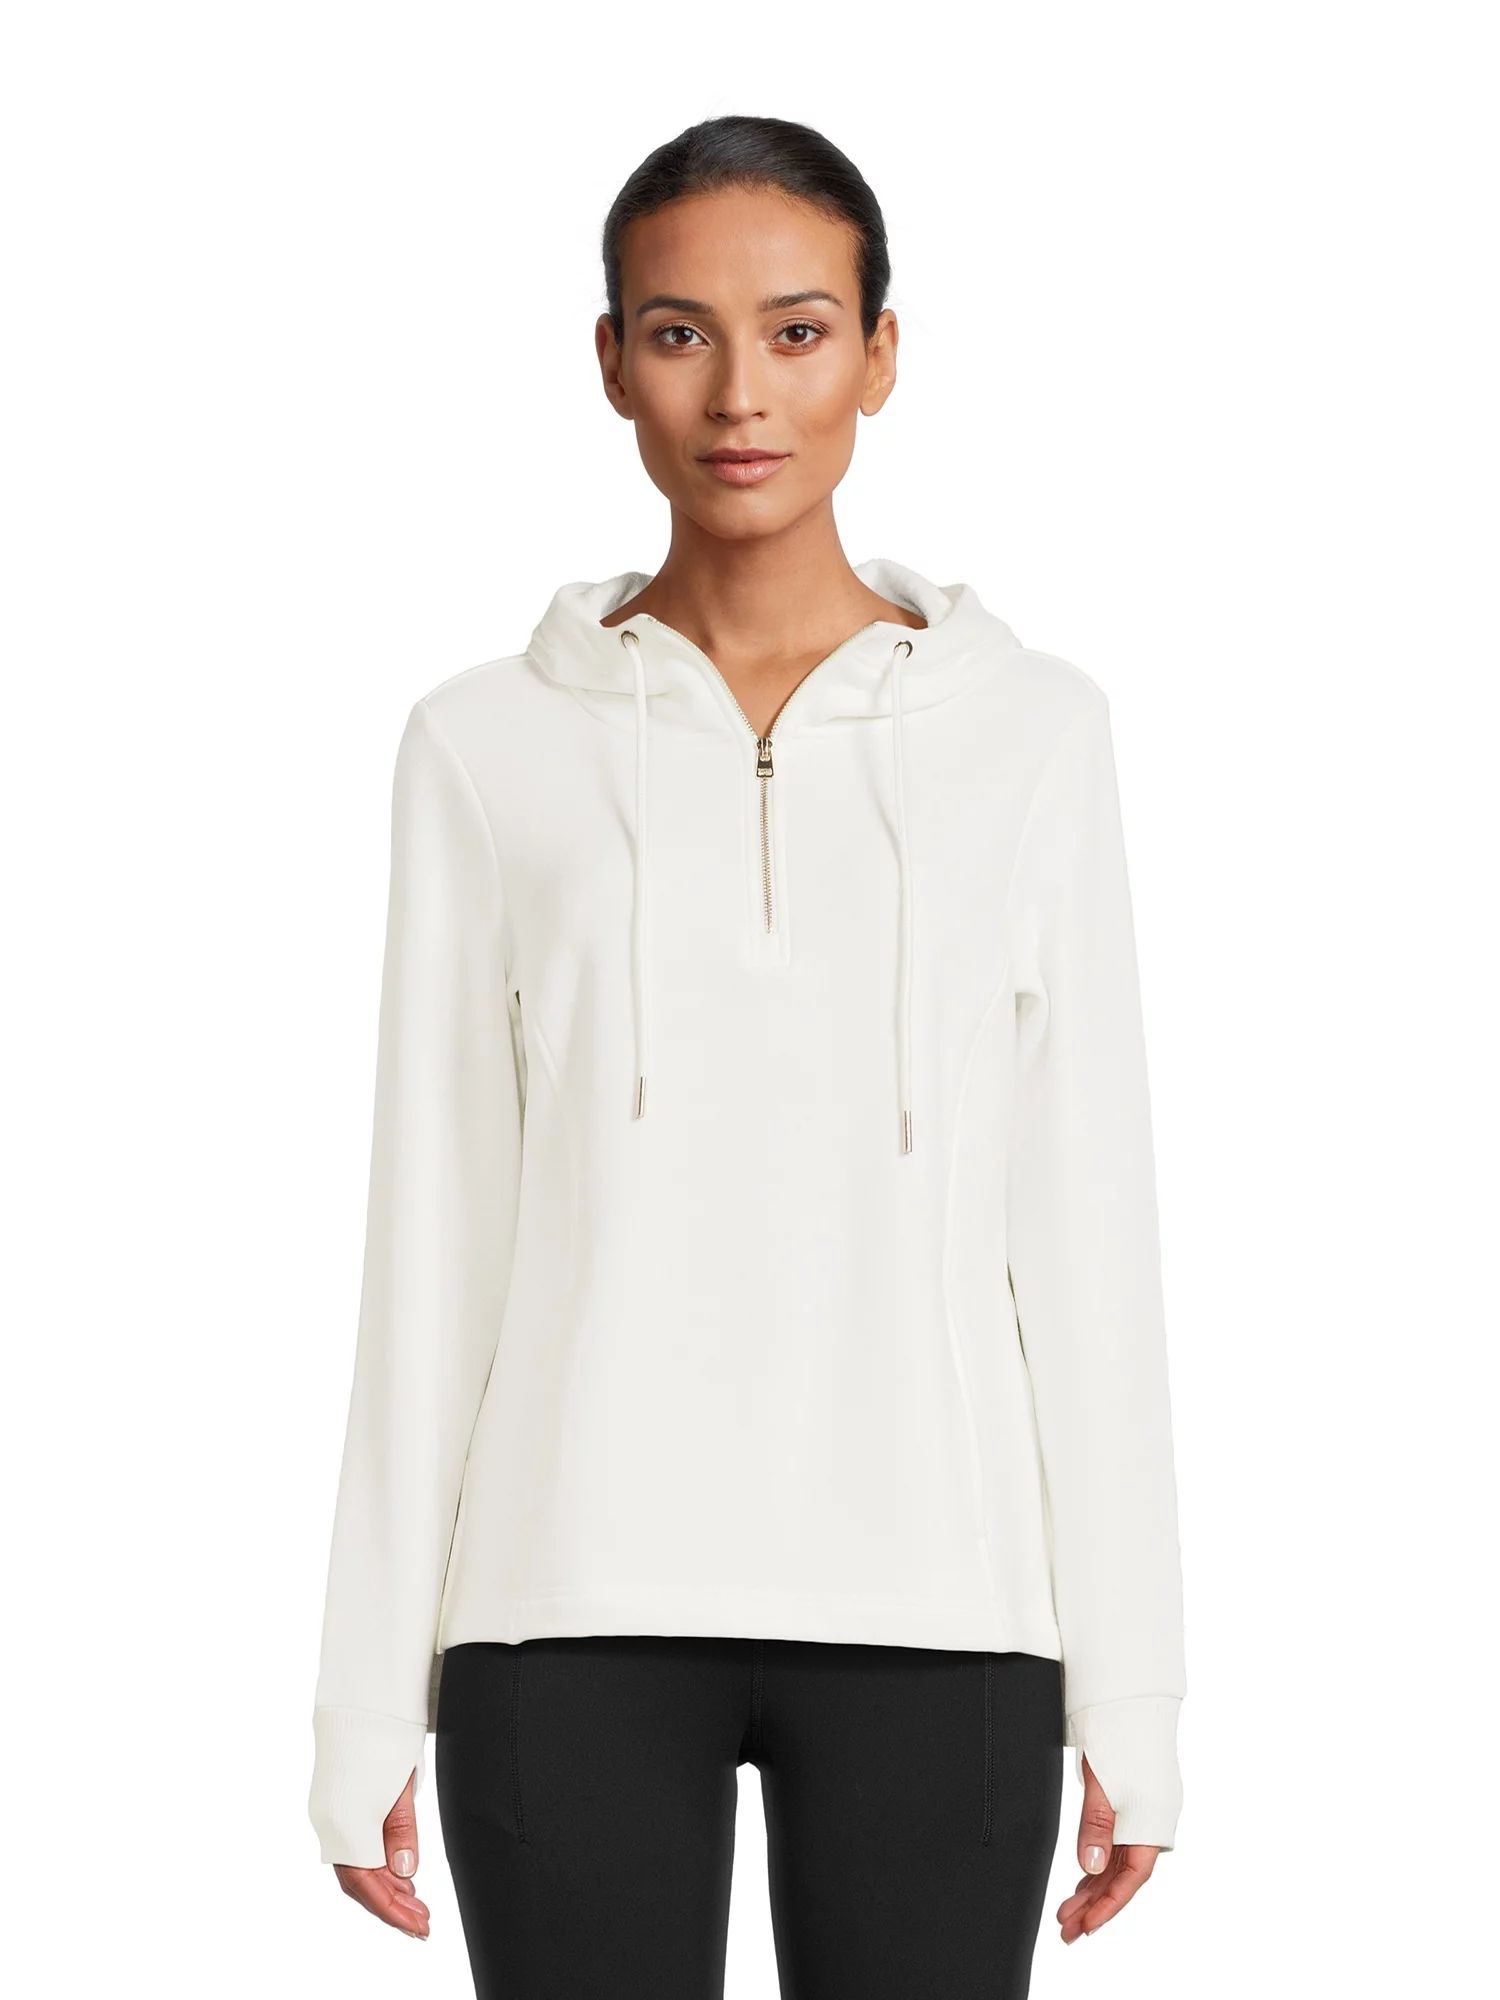 Avia Women's Quarter Zip Pullover Hoodie, Sizes XS-3XL | Walmart (US)